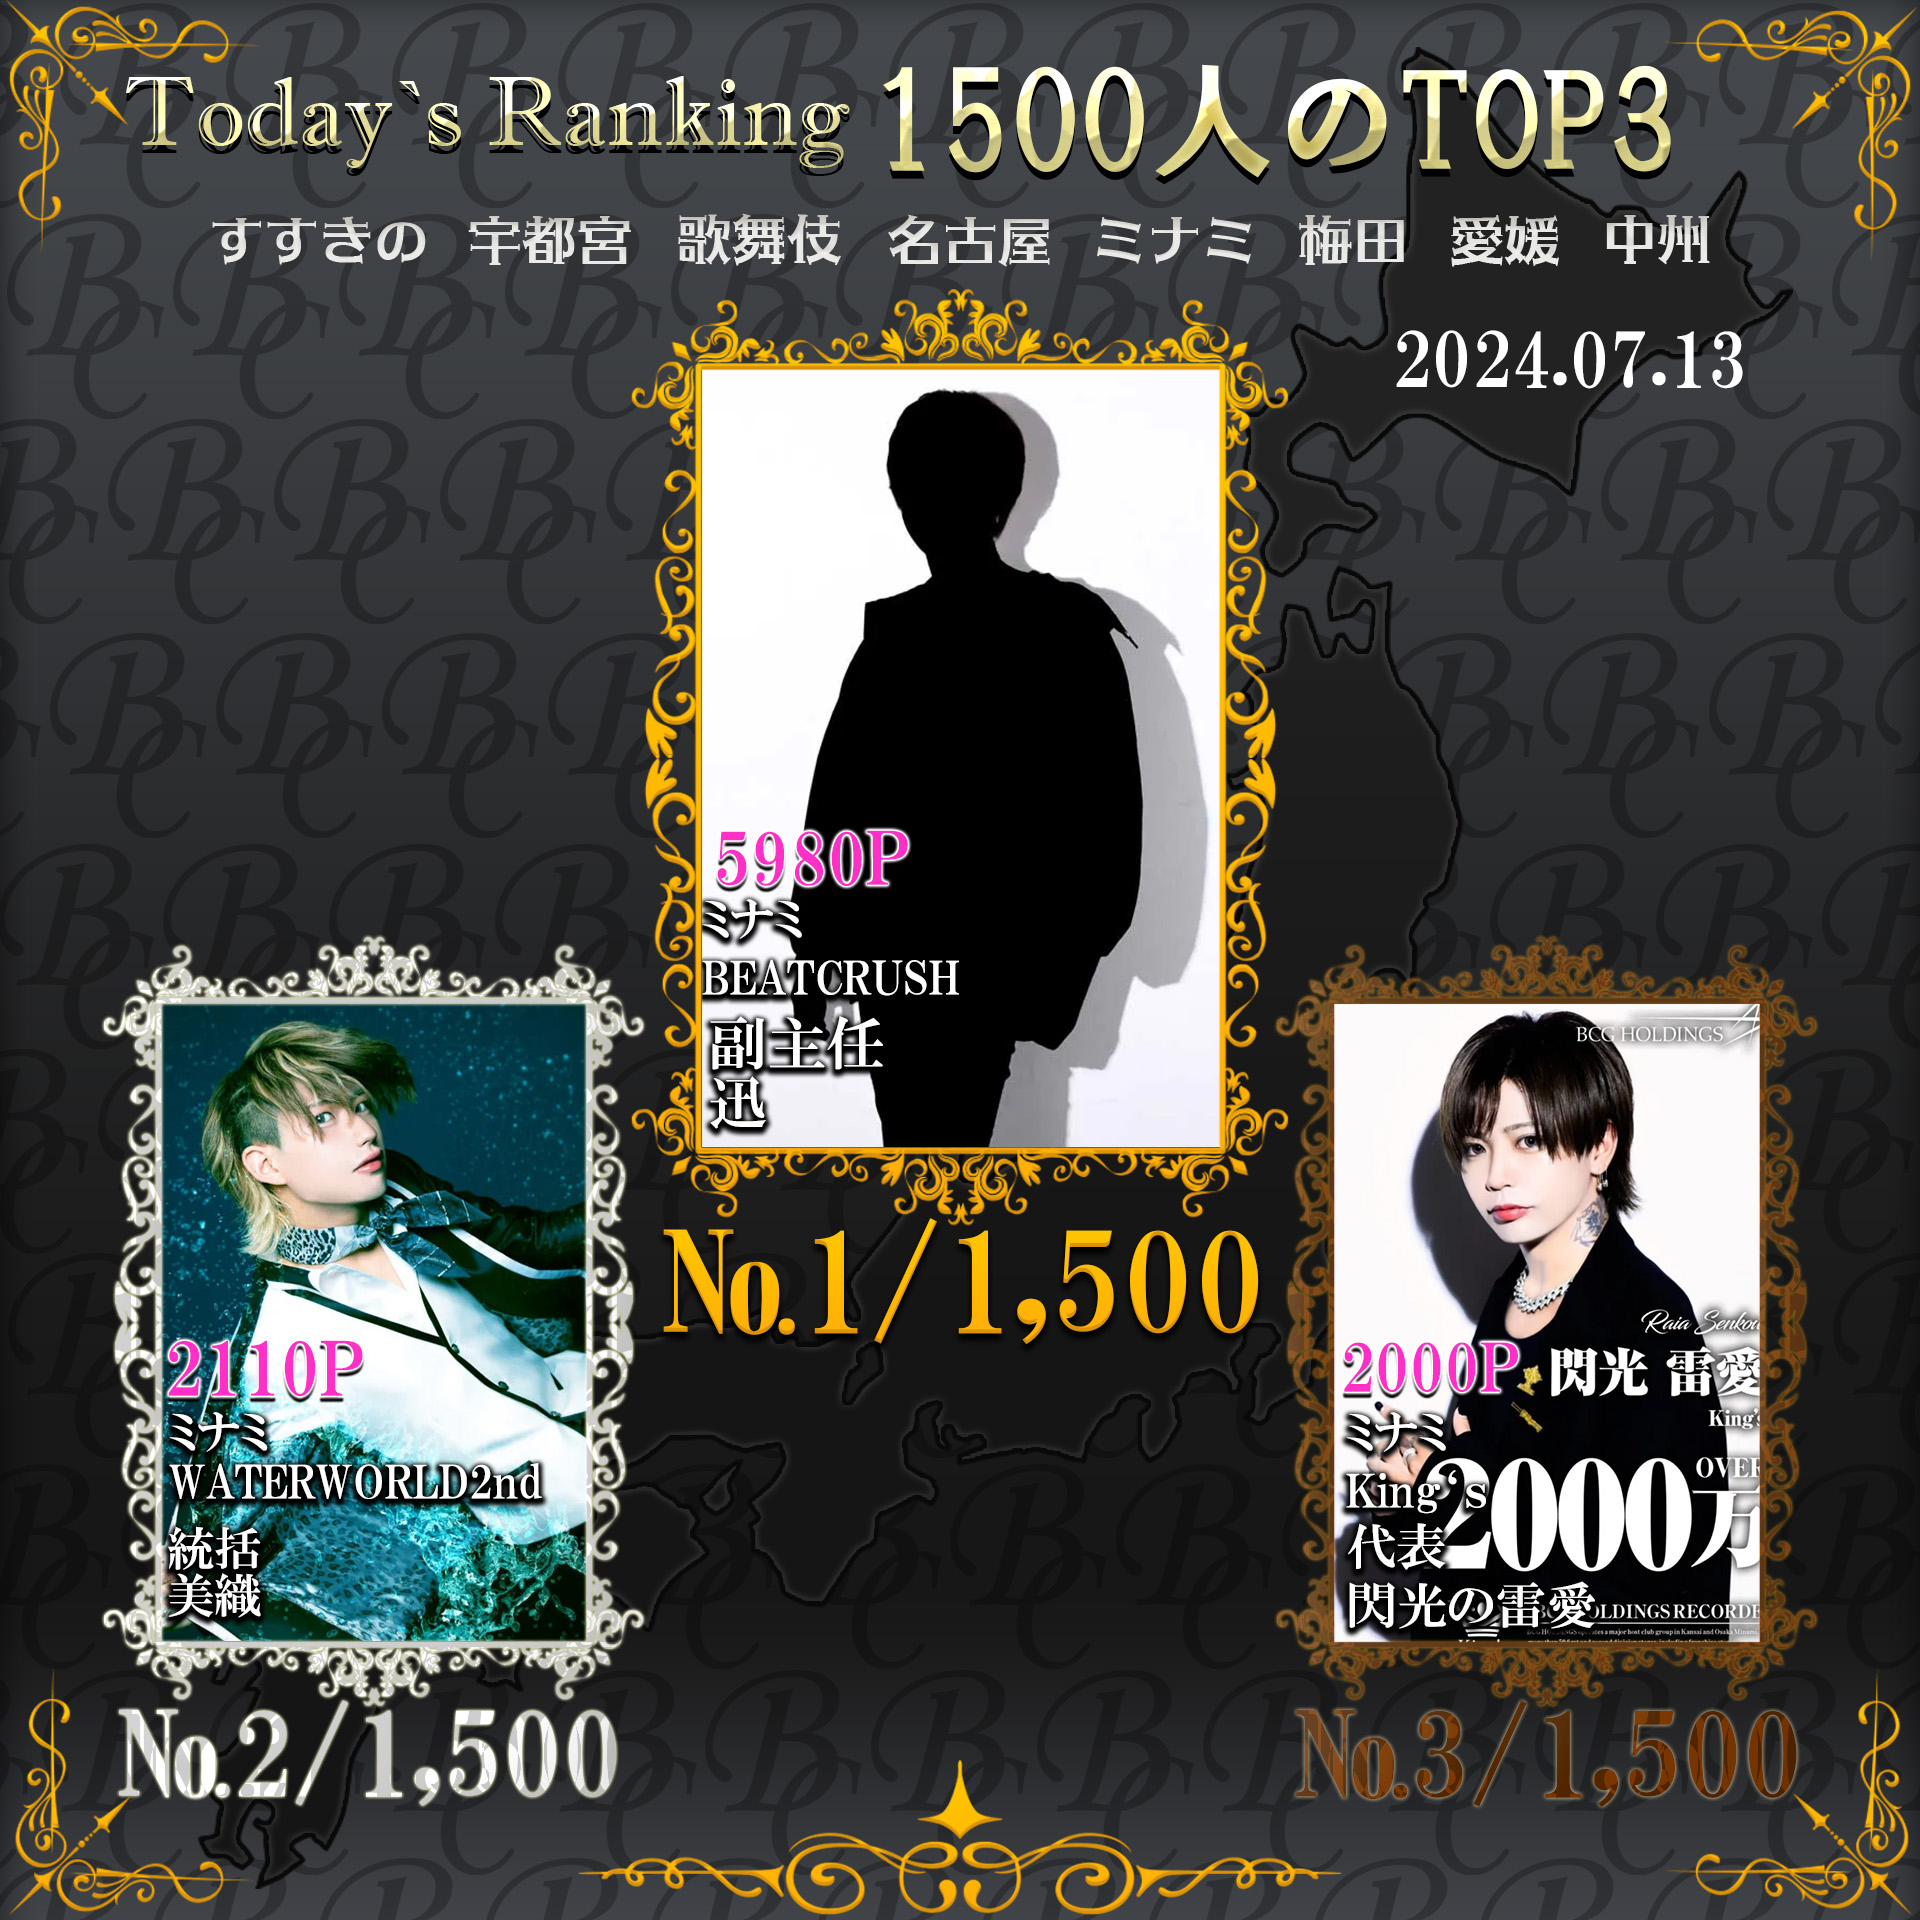 7/13 Today’s Ranking